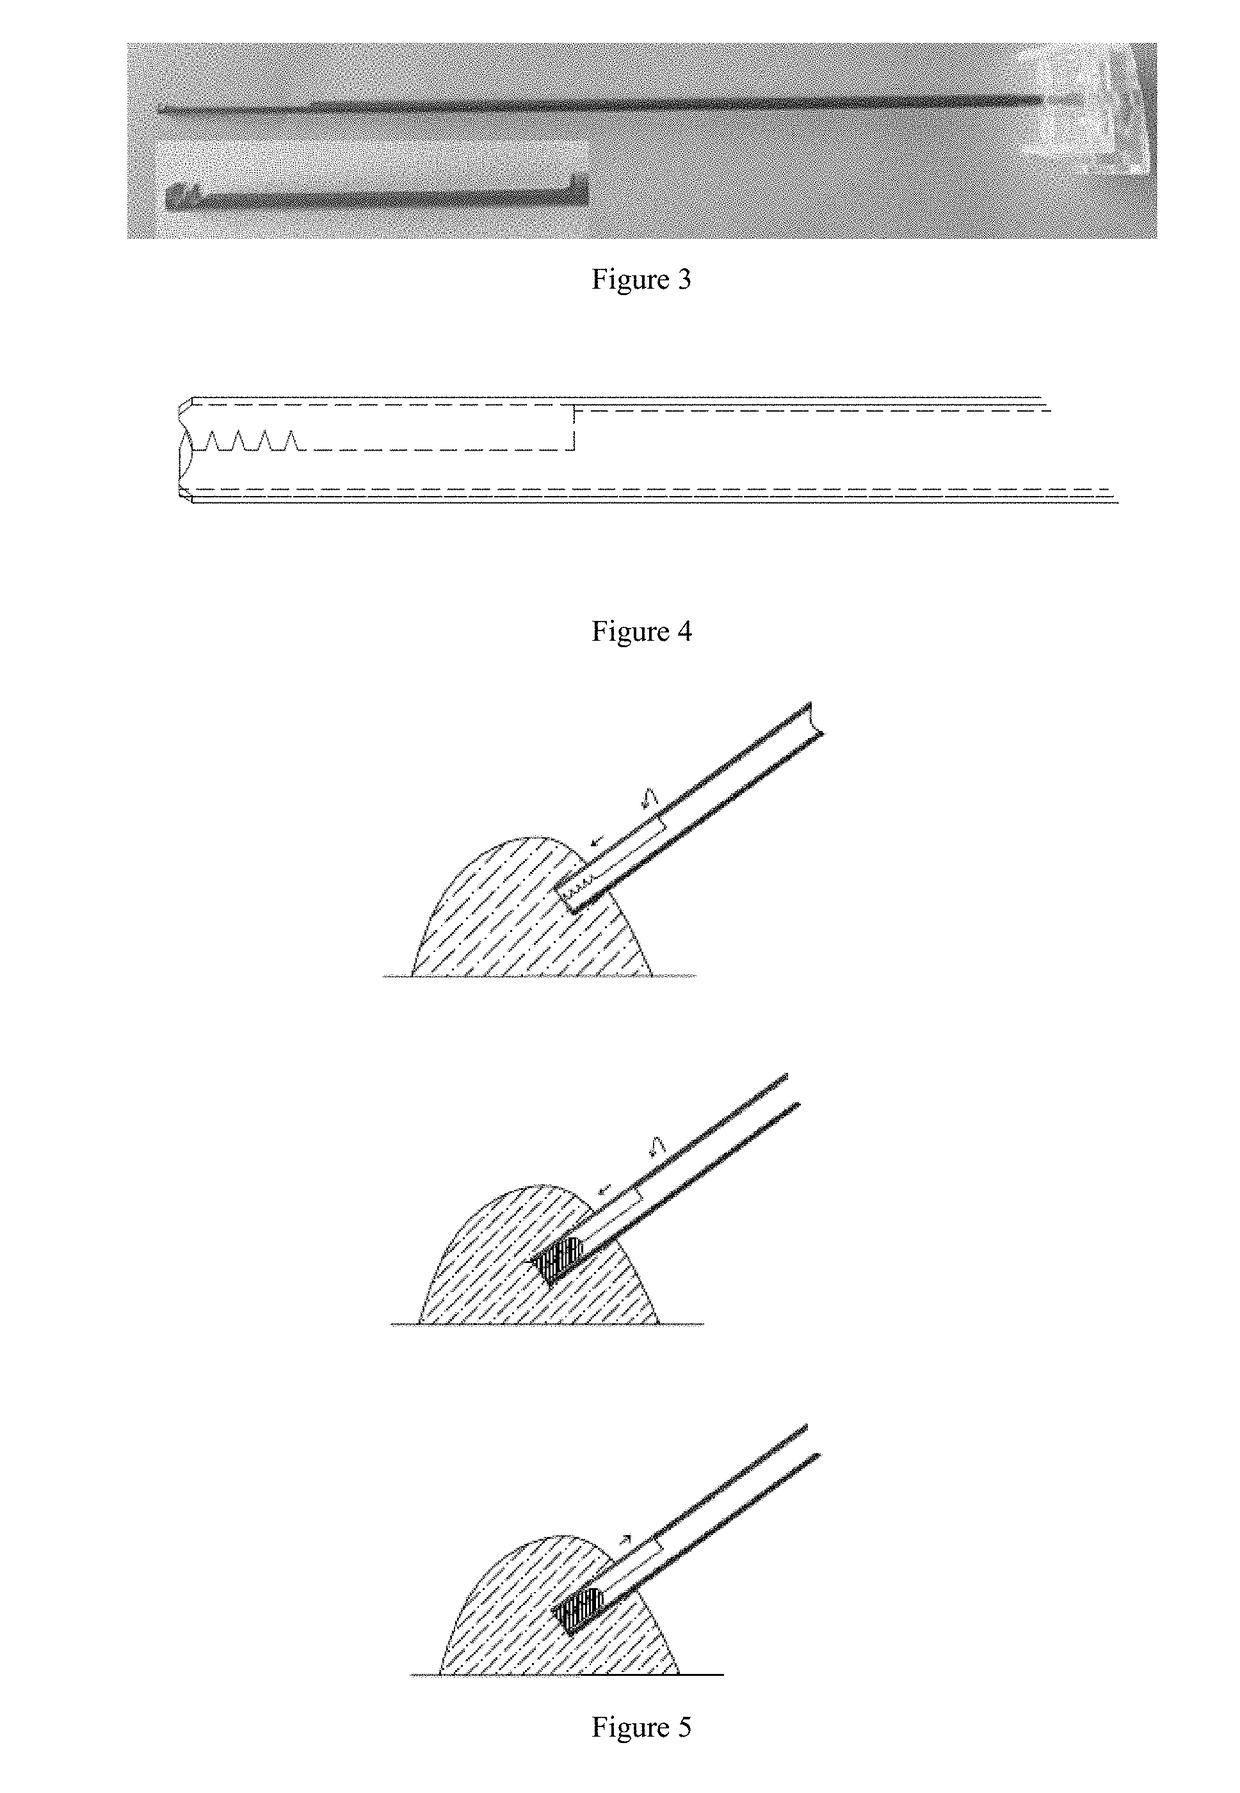 Spiral soft tissue biopsy needle